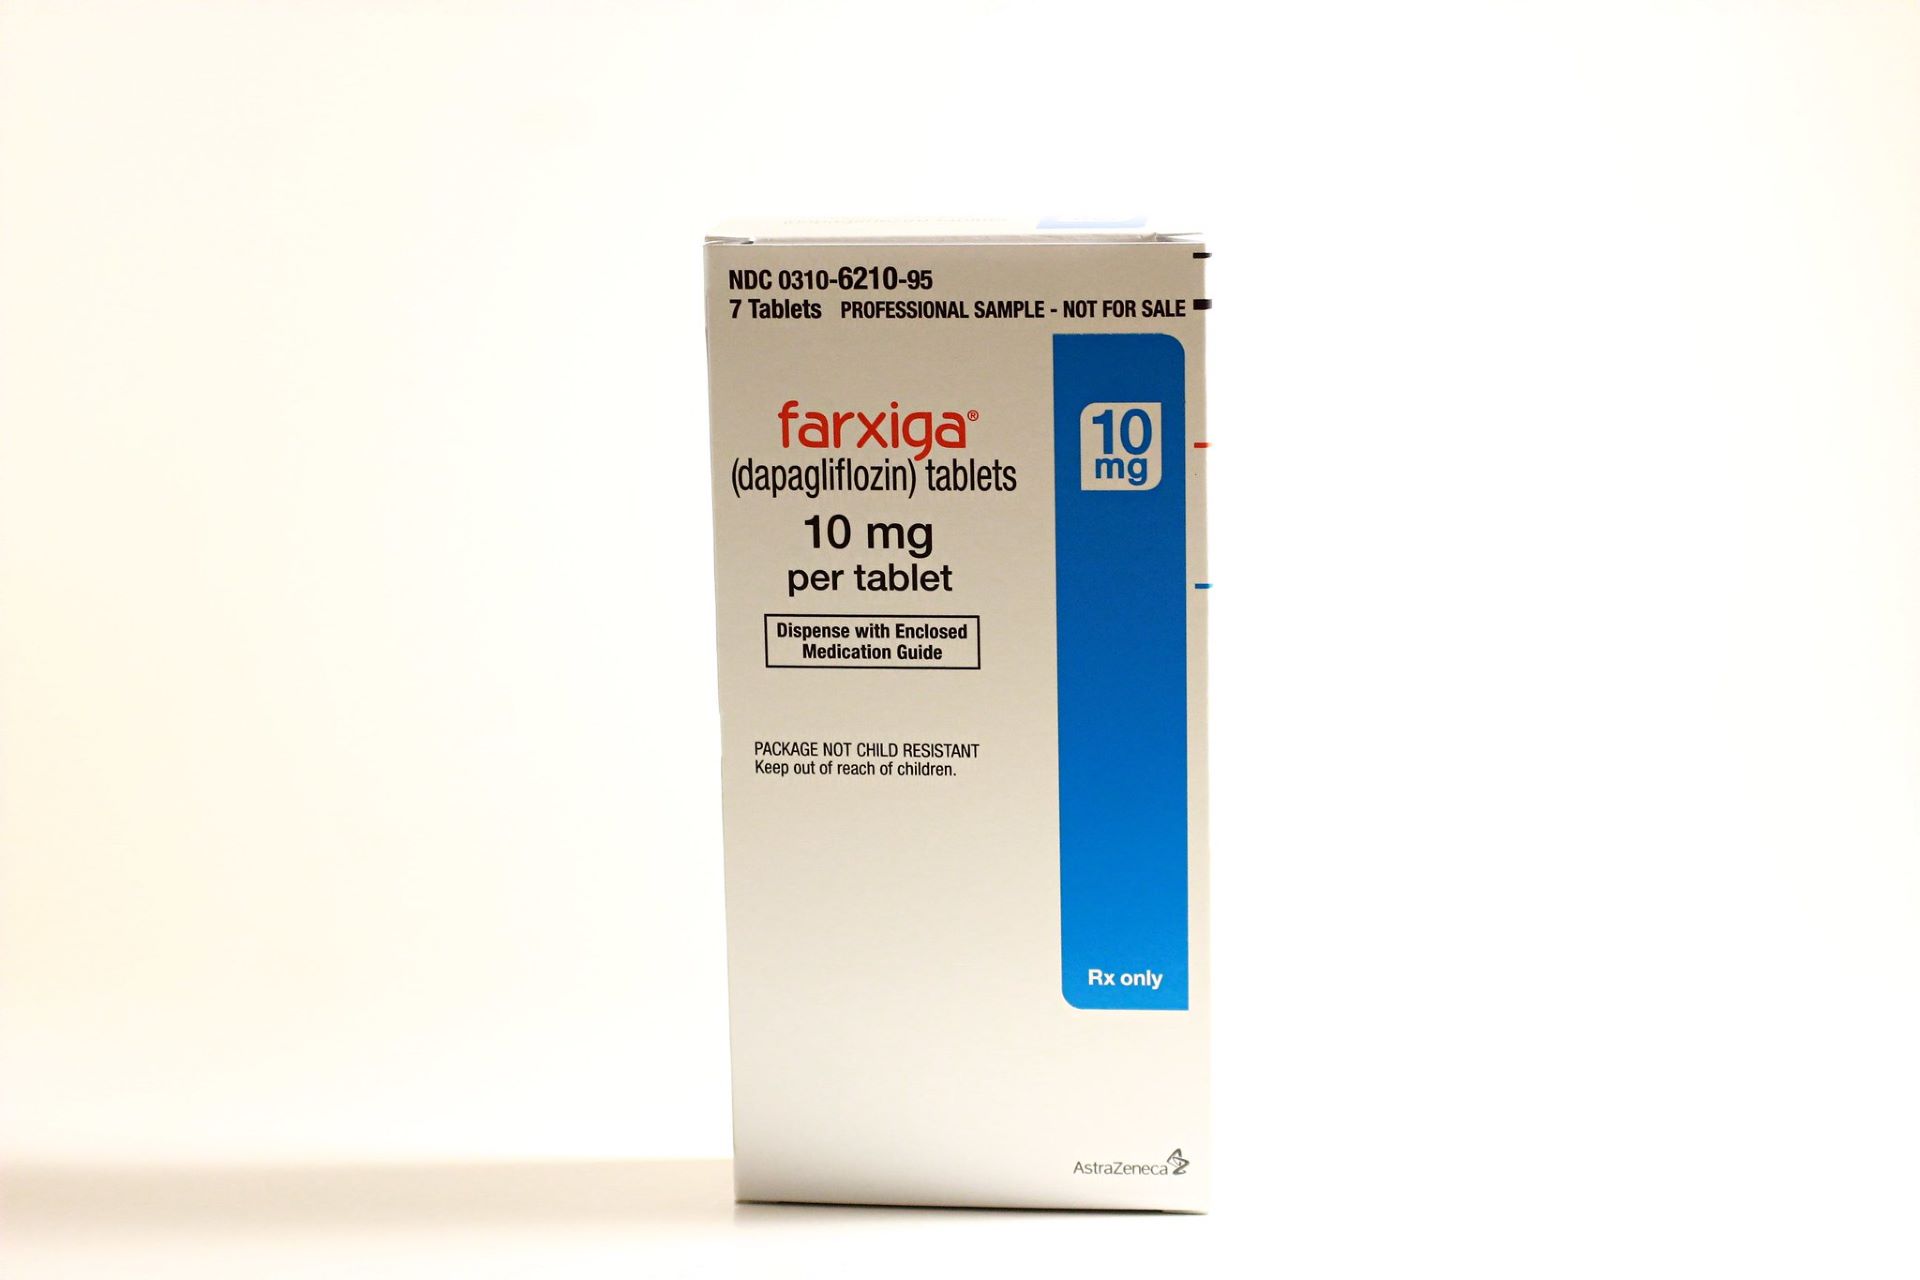 fda-approves-astrazeneca-s-farxiga-for-chronic-kidney-disease-treatment